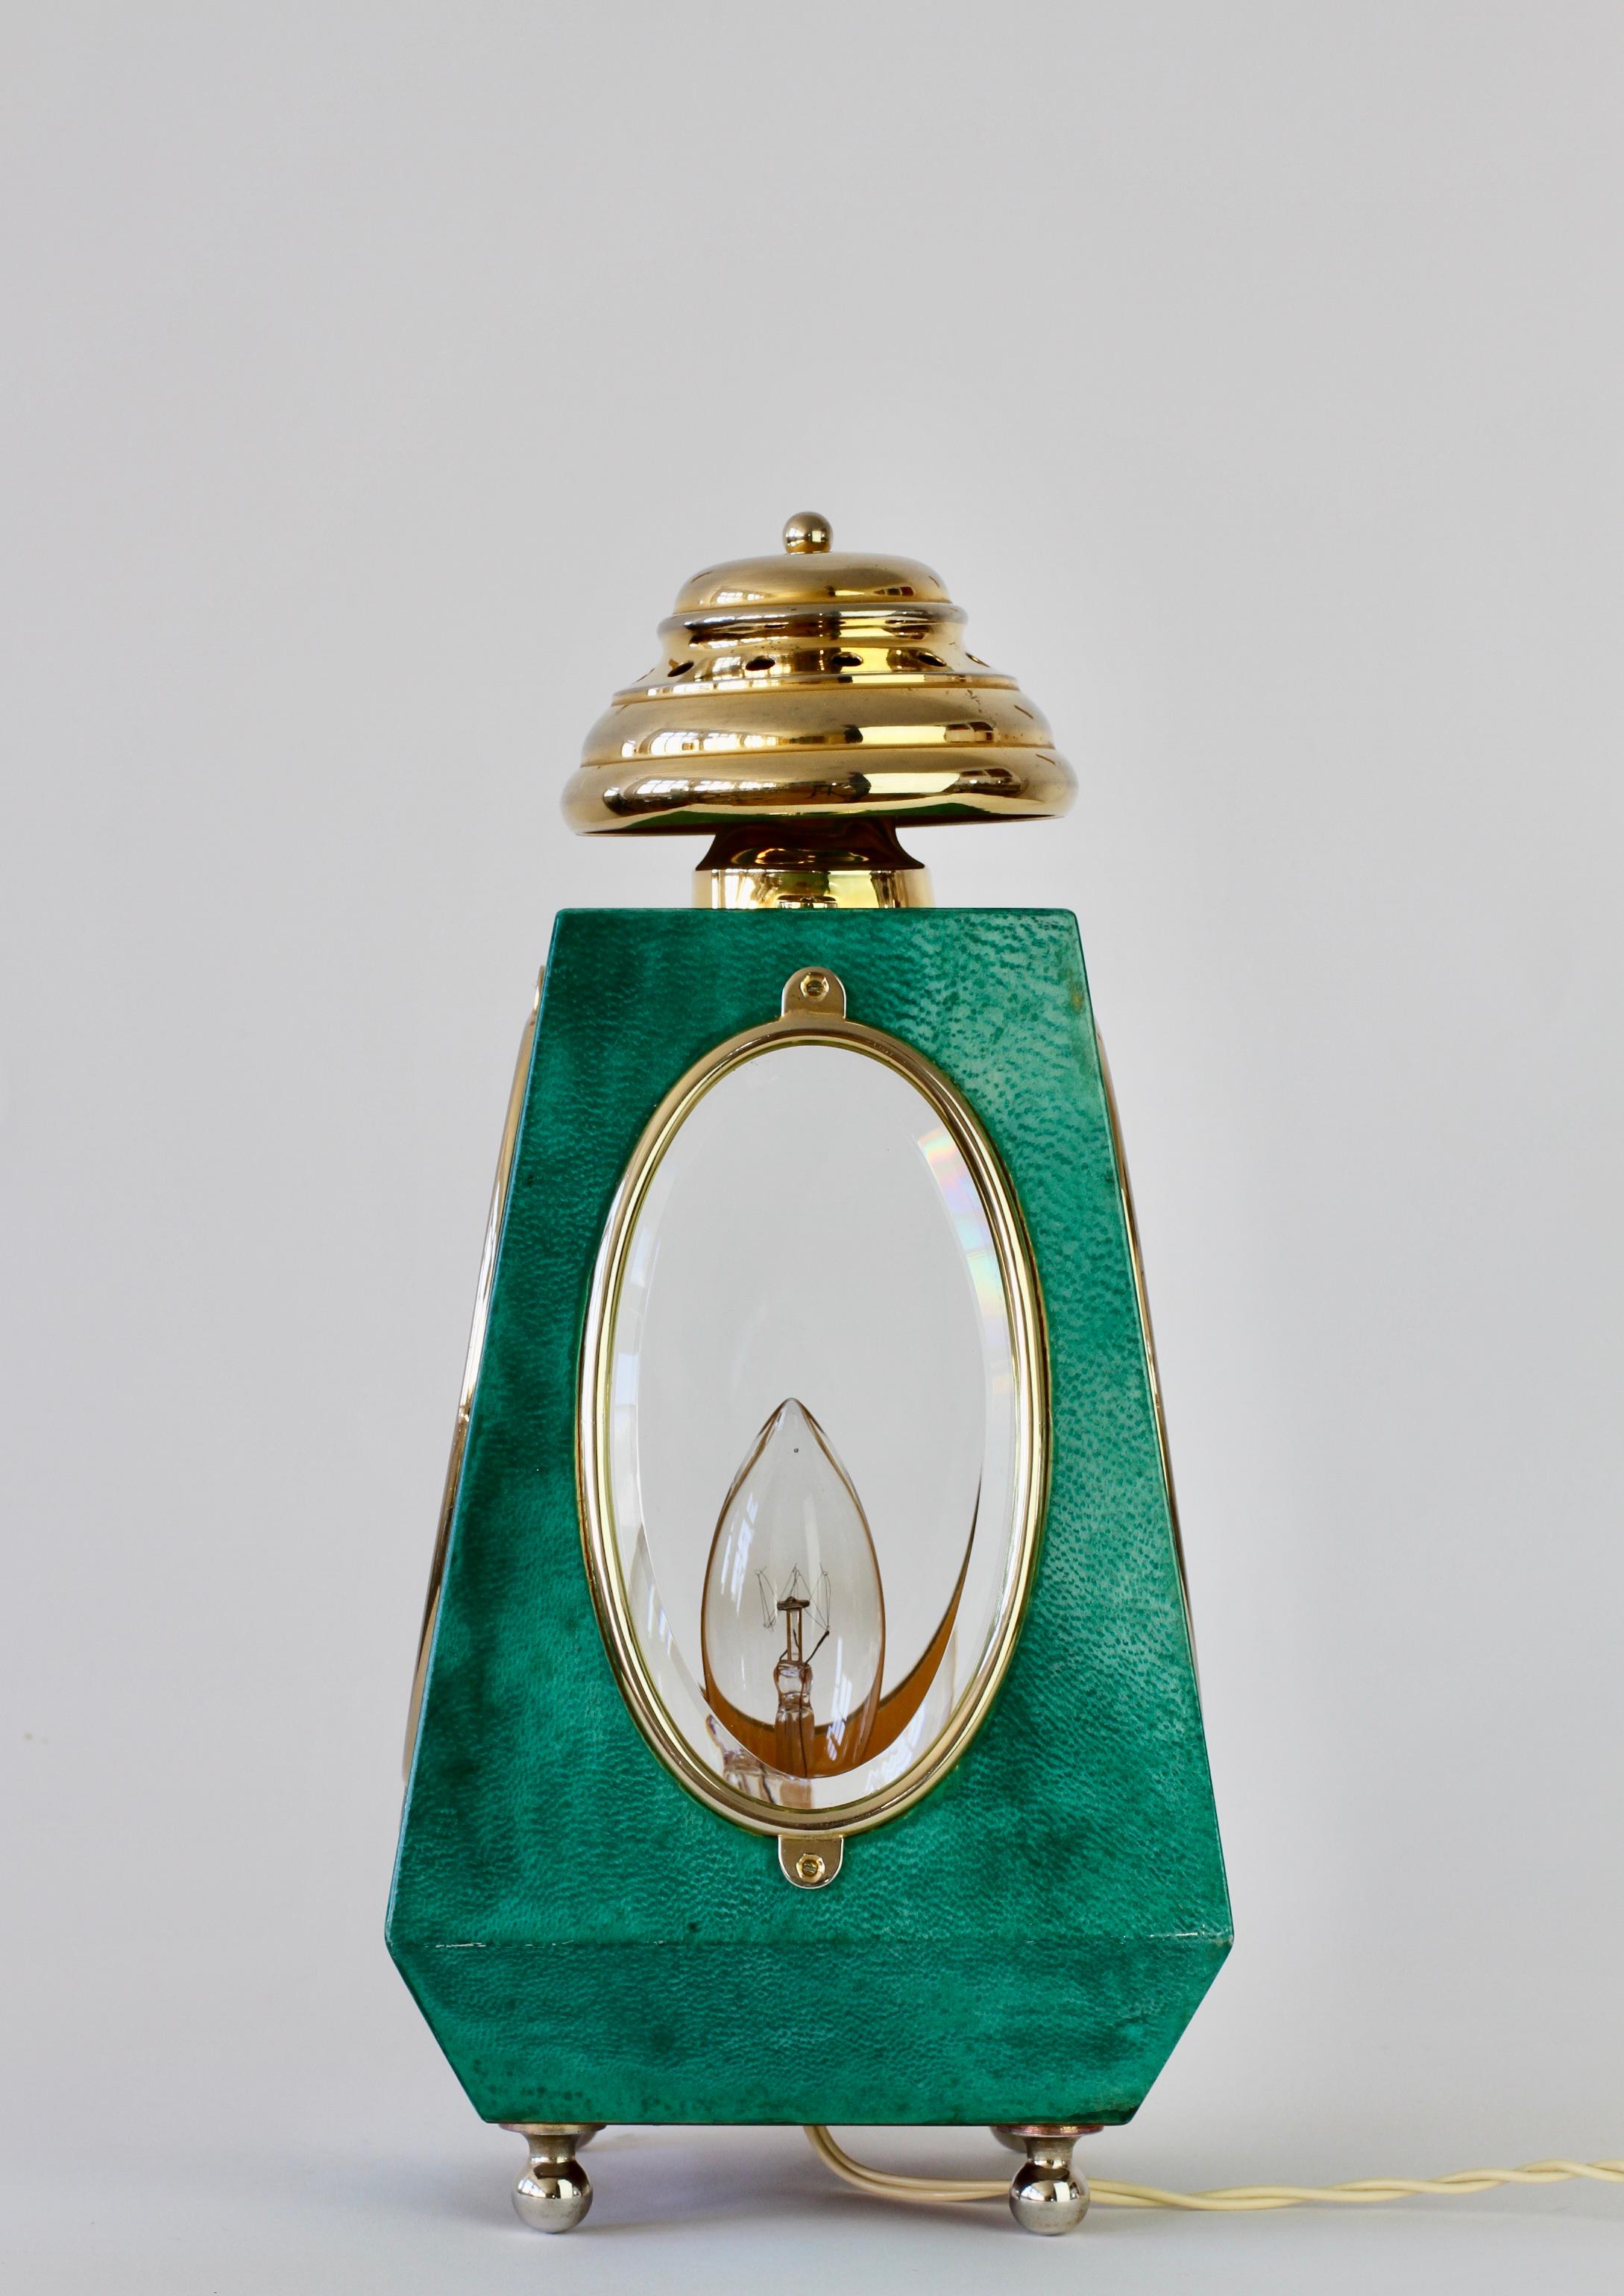 Metal Aldo Tura 1960s Midcentury Table Lamp / Lantern in Green Italian Goatskin